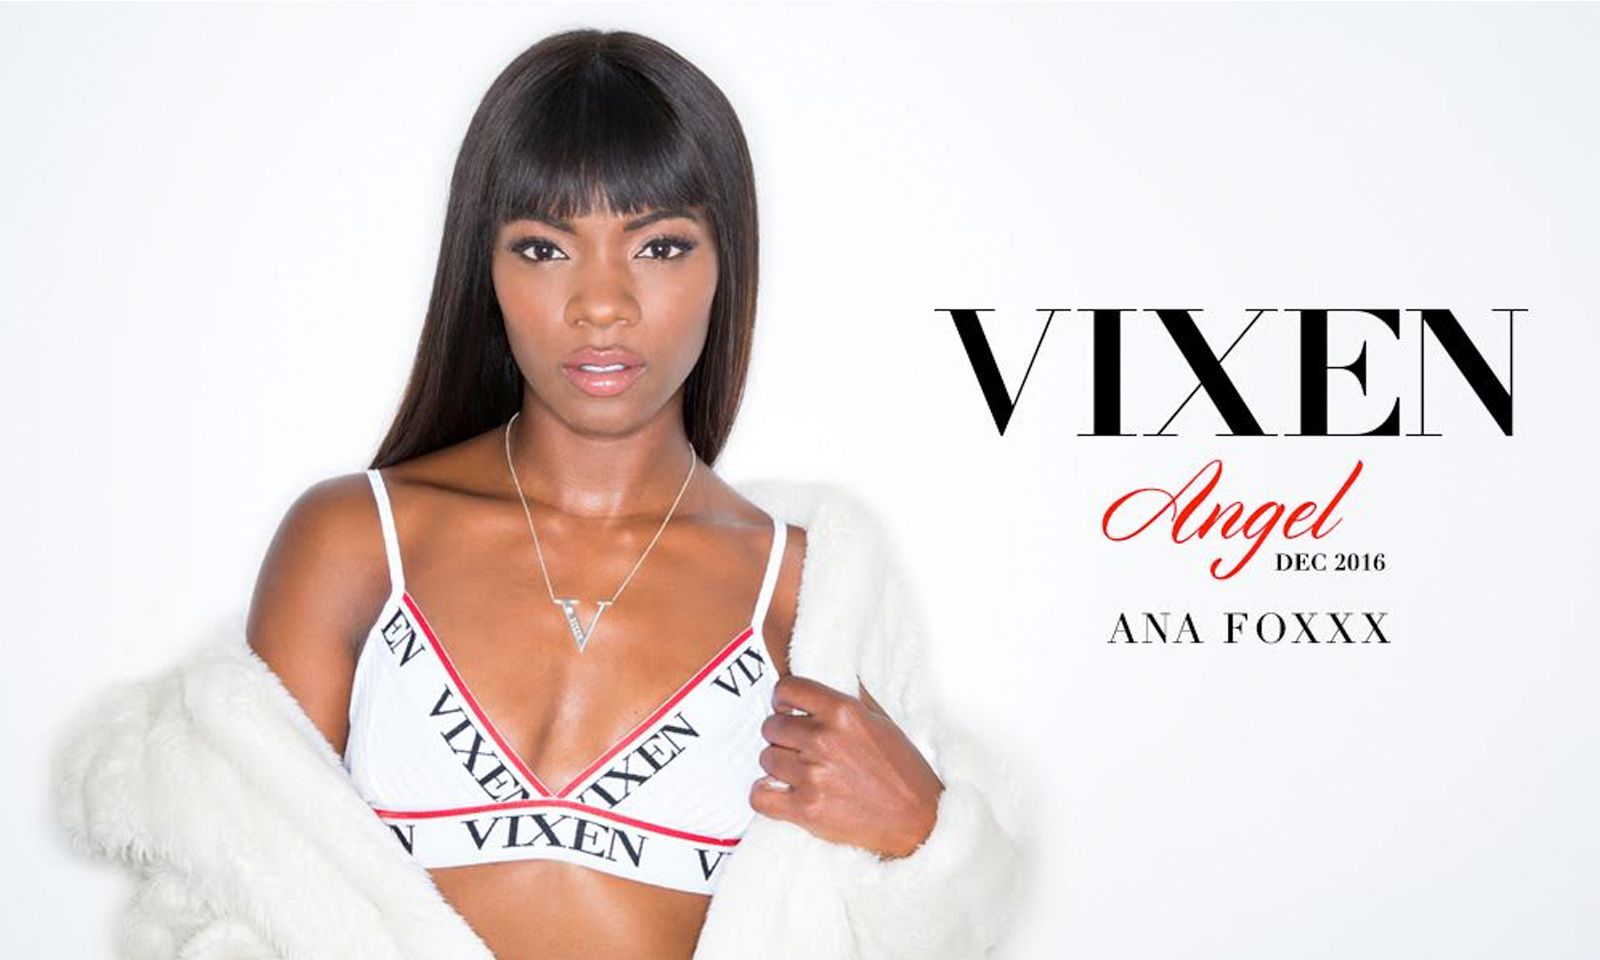 Ana Foxxx Named Vixen Angel for December